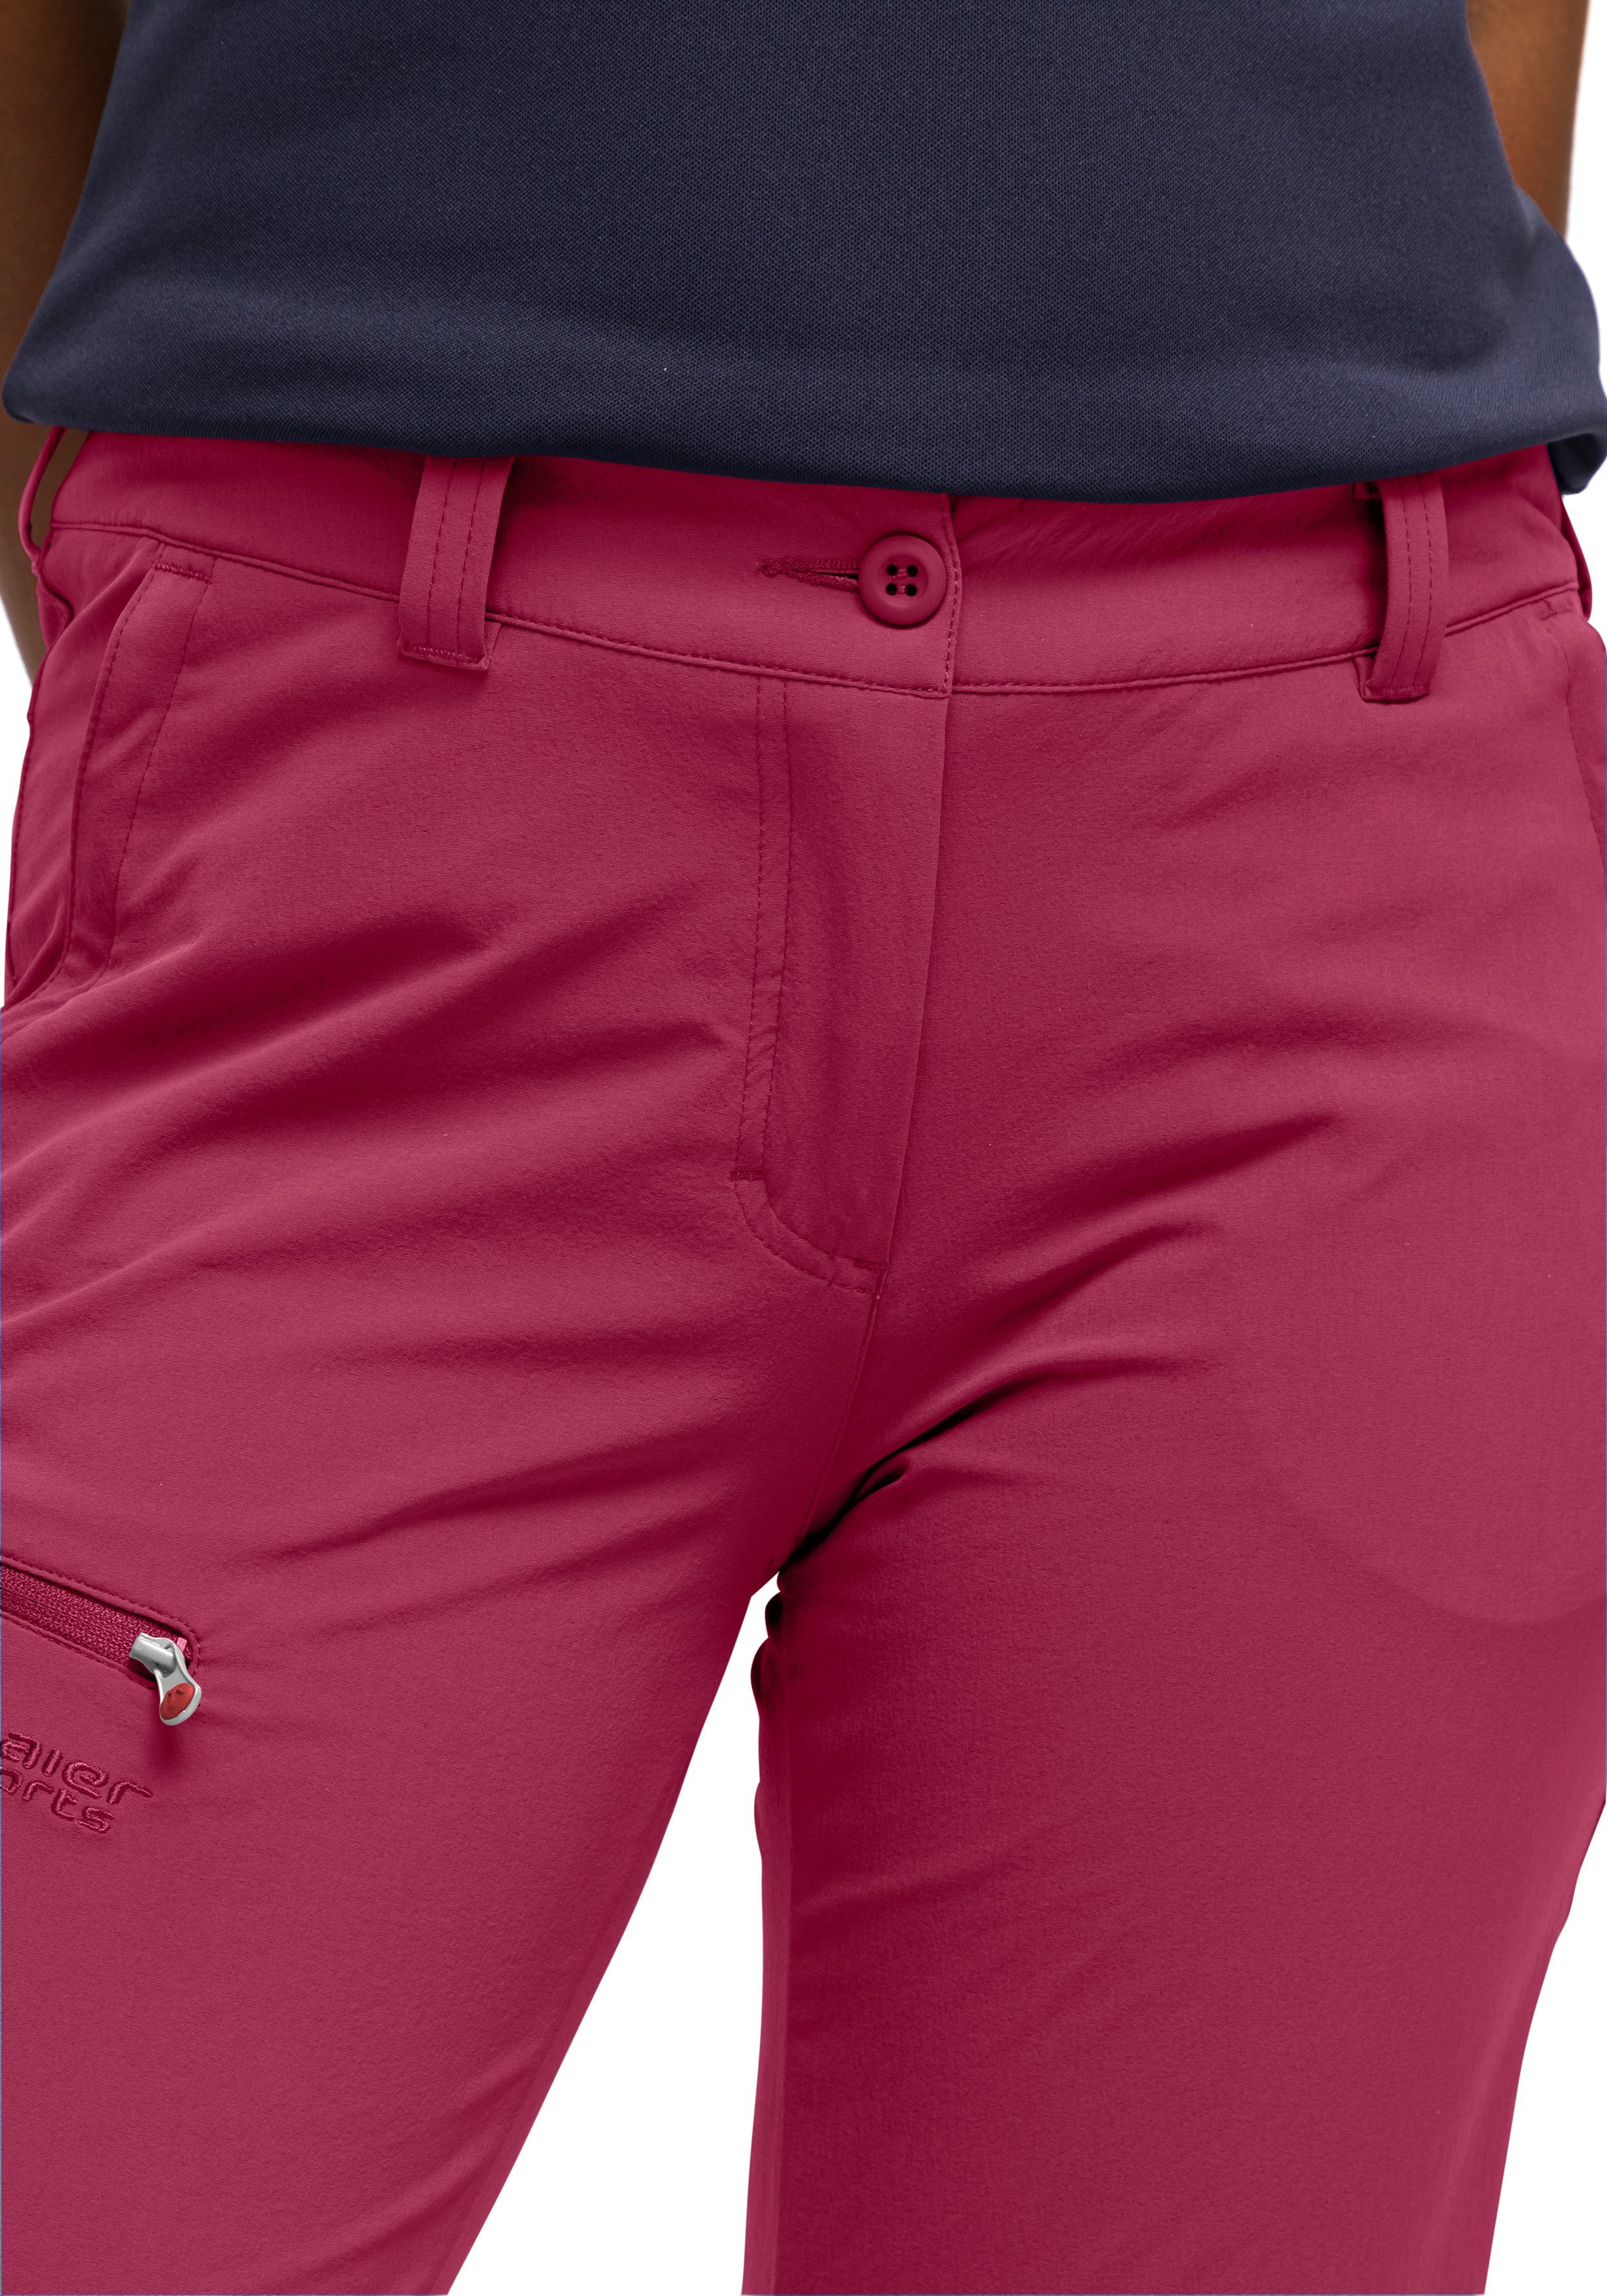 Wanderhose, elastischem Maier aus Outdoor-Hose purpurrot Damen Inara Funktionshose Sports Material slim